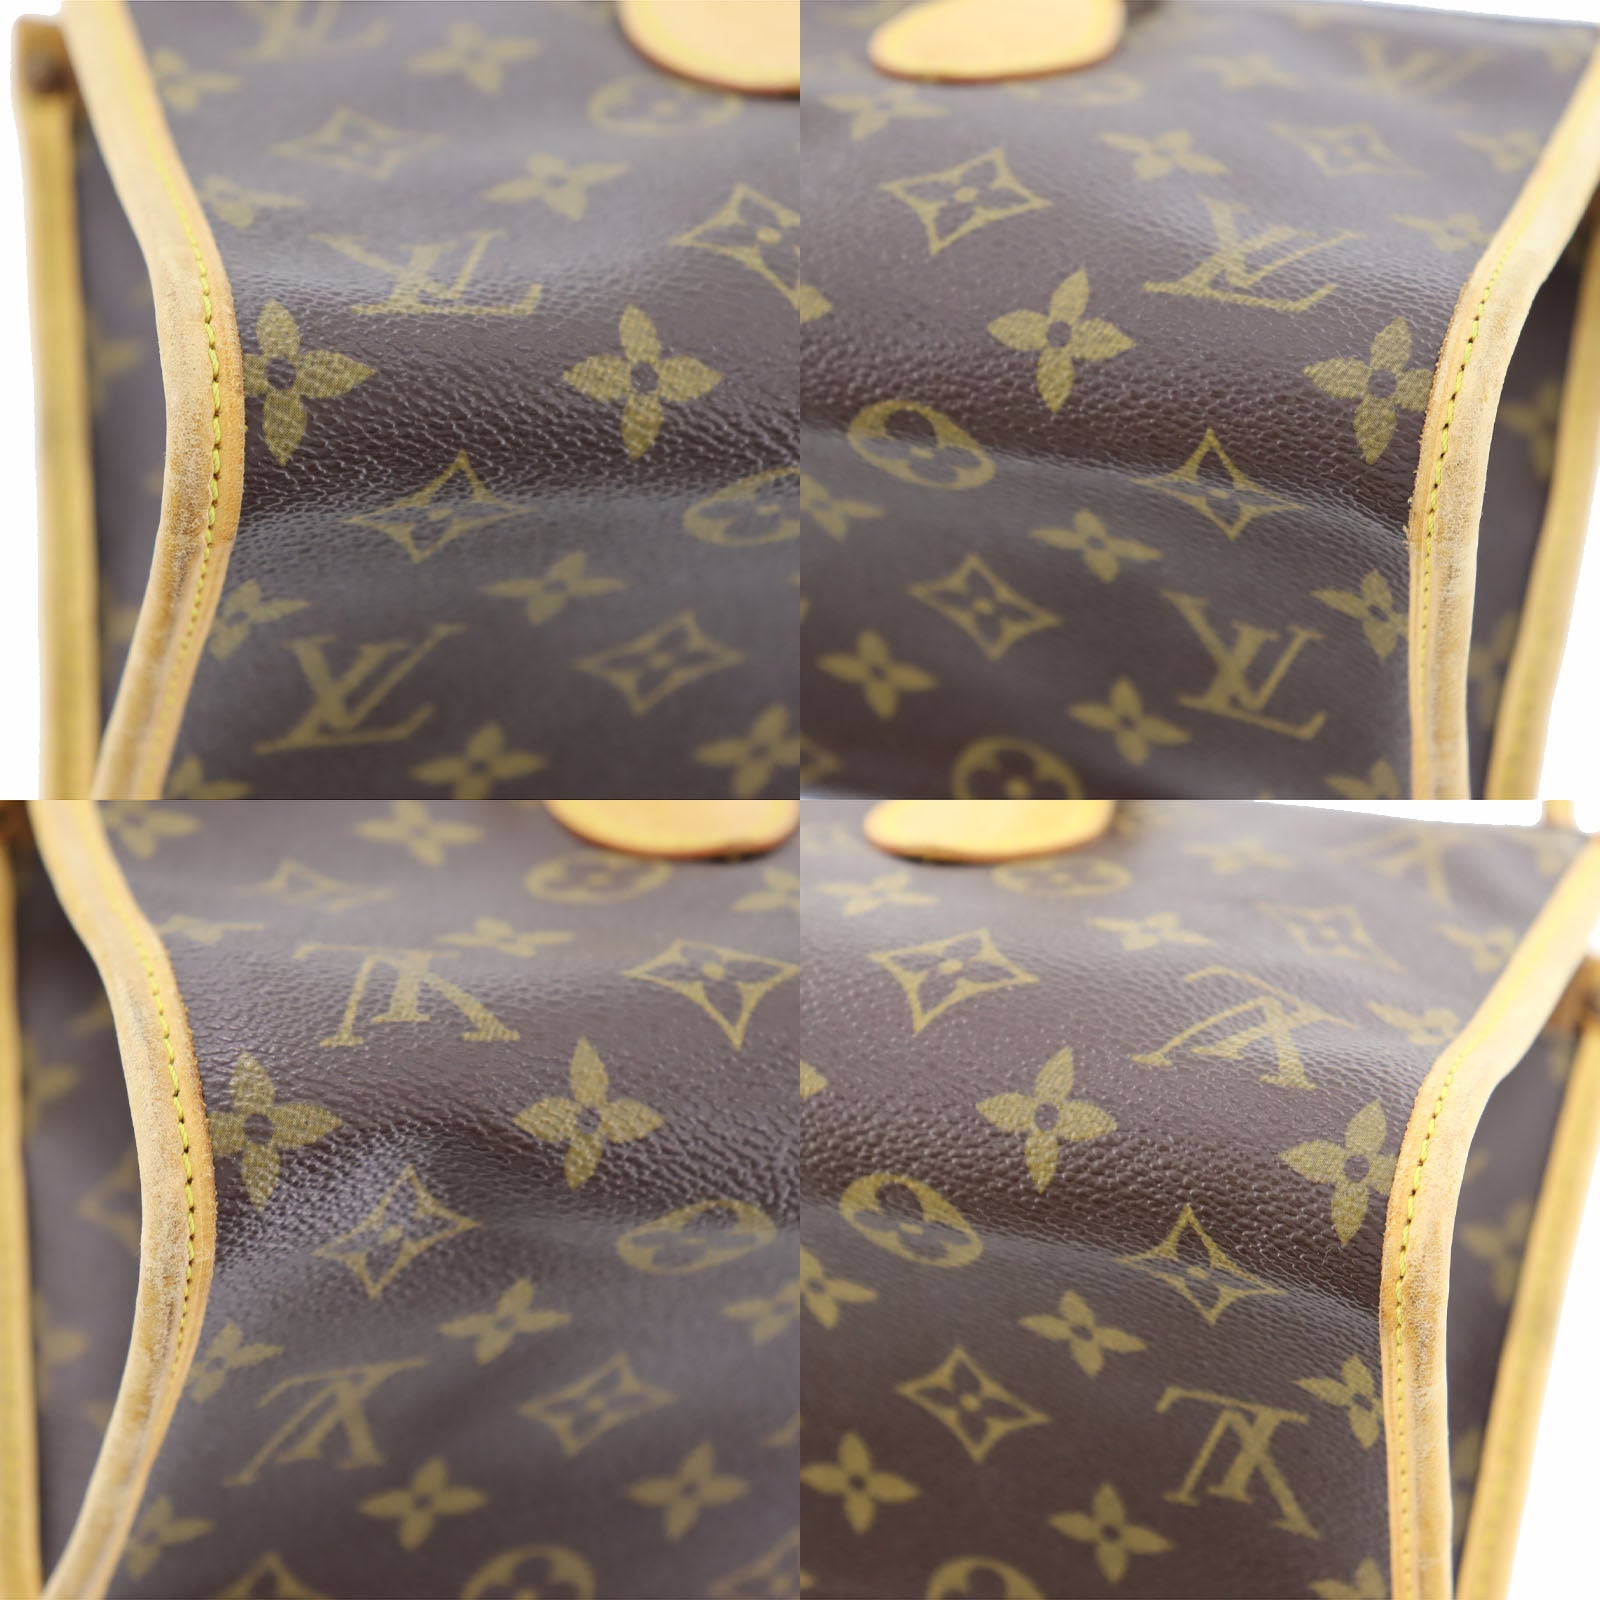 Louis Vuitton Popincourt Handbag Monogram M40009 Vi0075